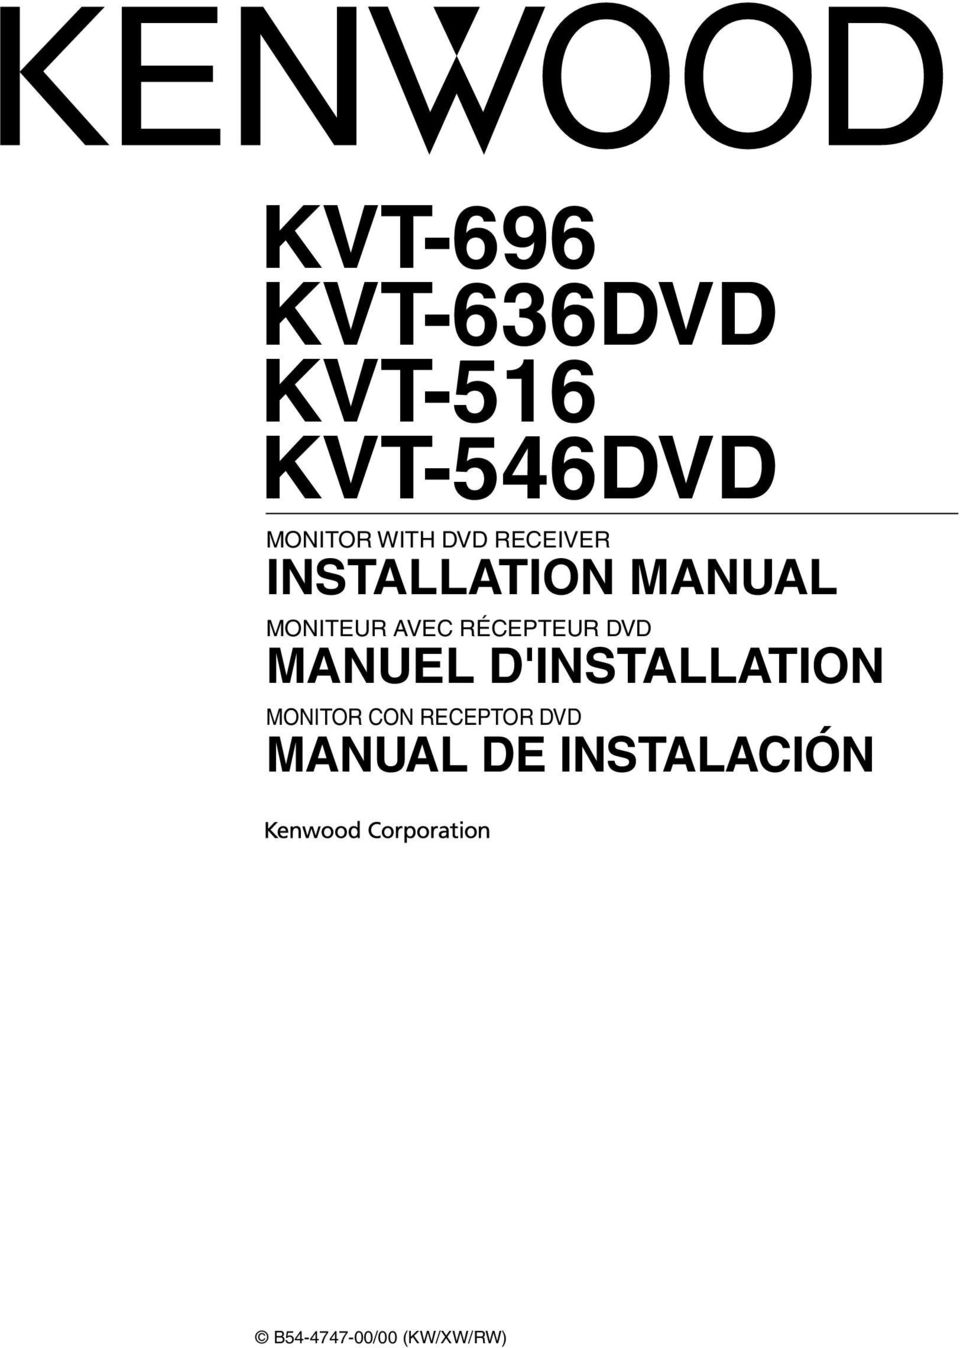 RÉCEPTEUR DVD MANUEL D'INSTALLATION MONITOR CON